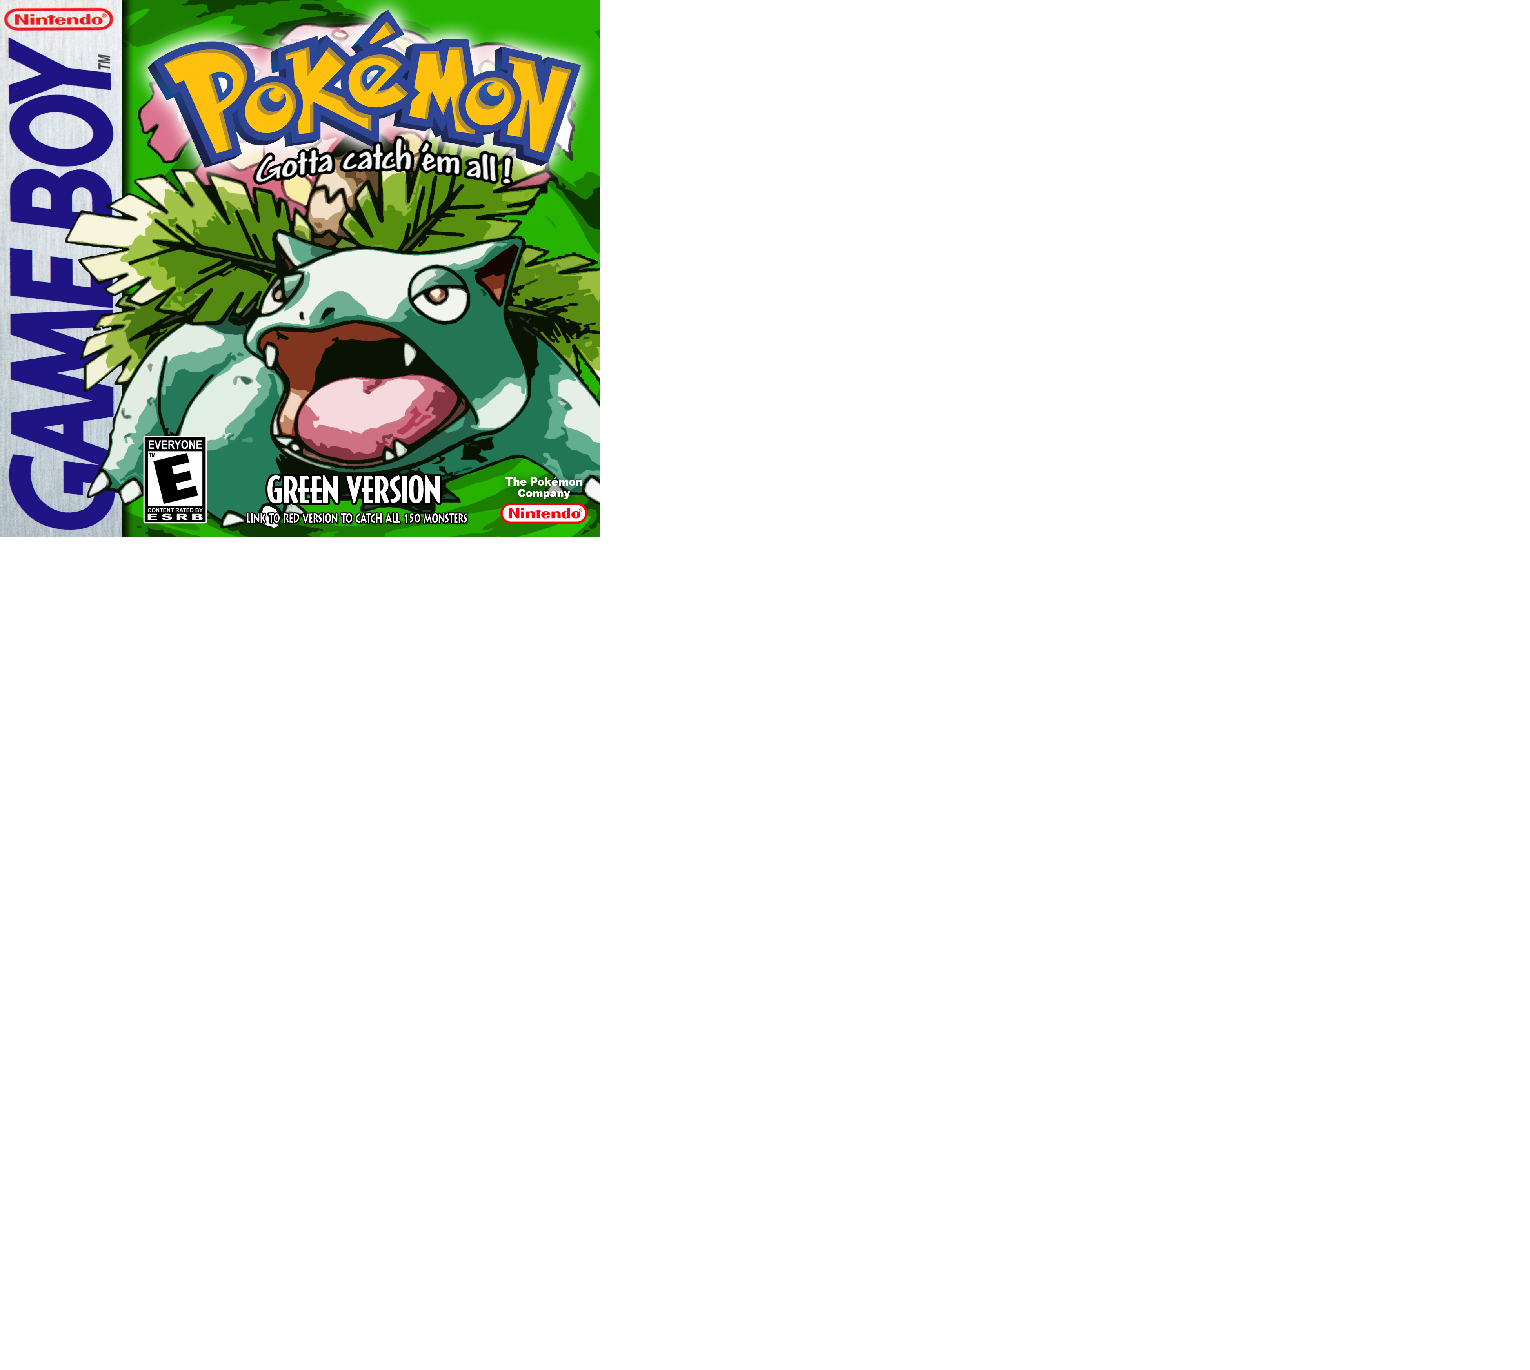 Pokemon Emerald Rom Download Emuparadise